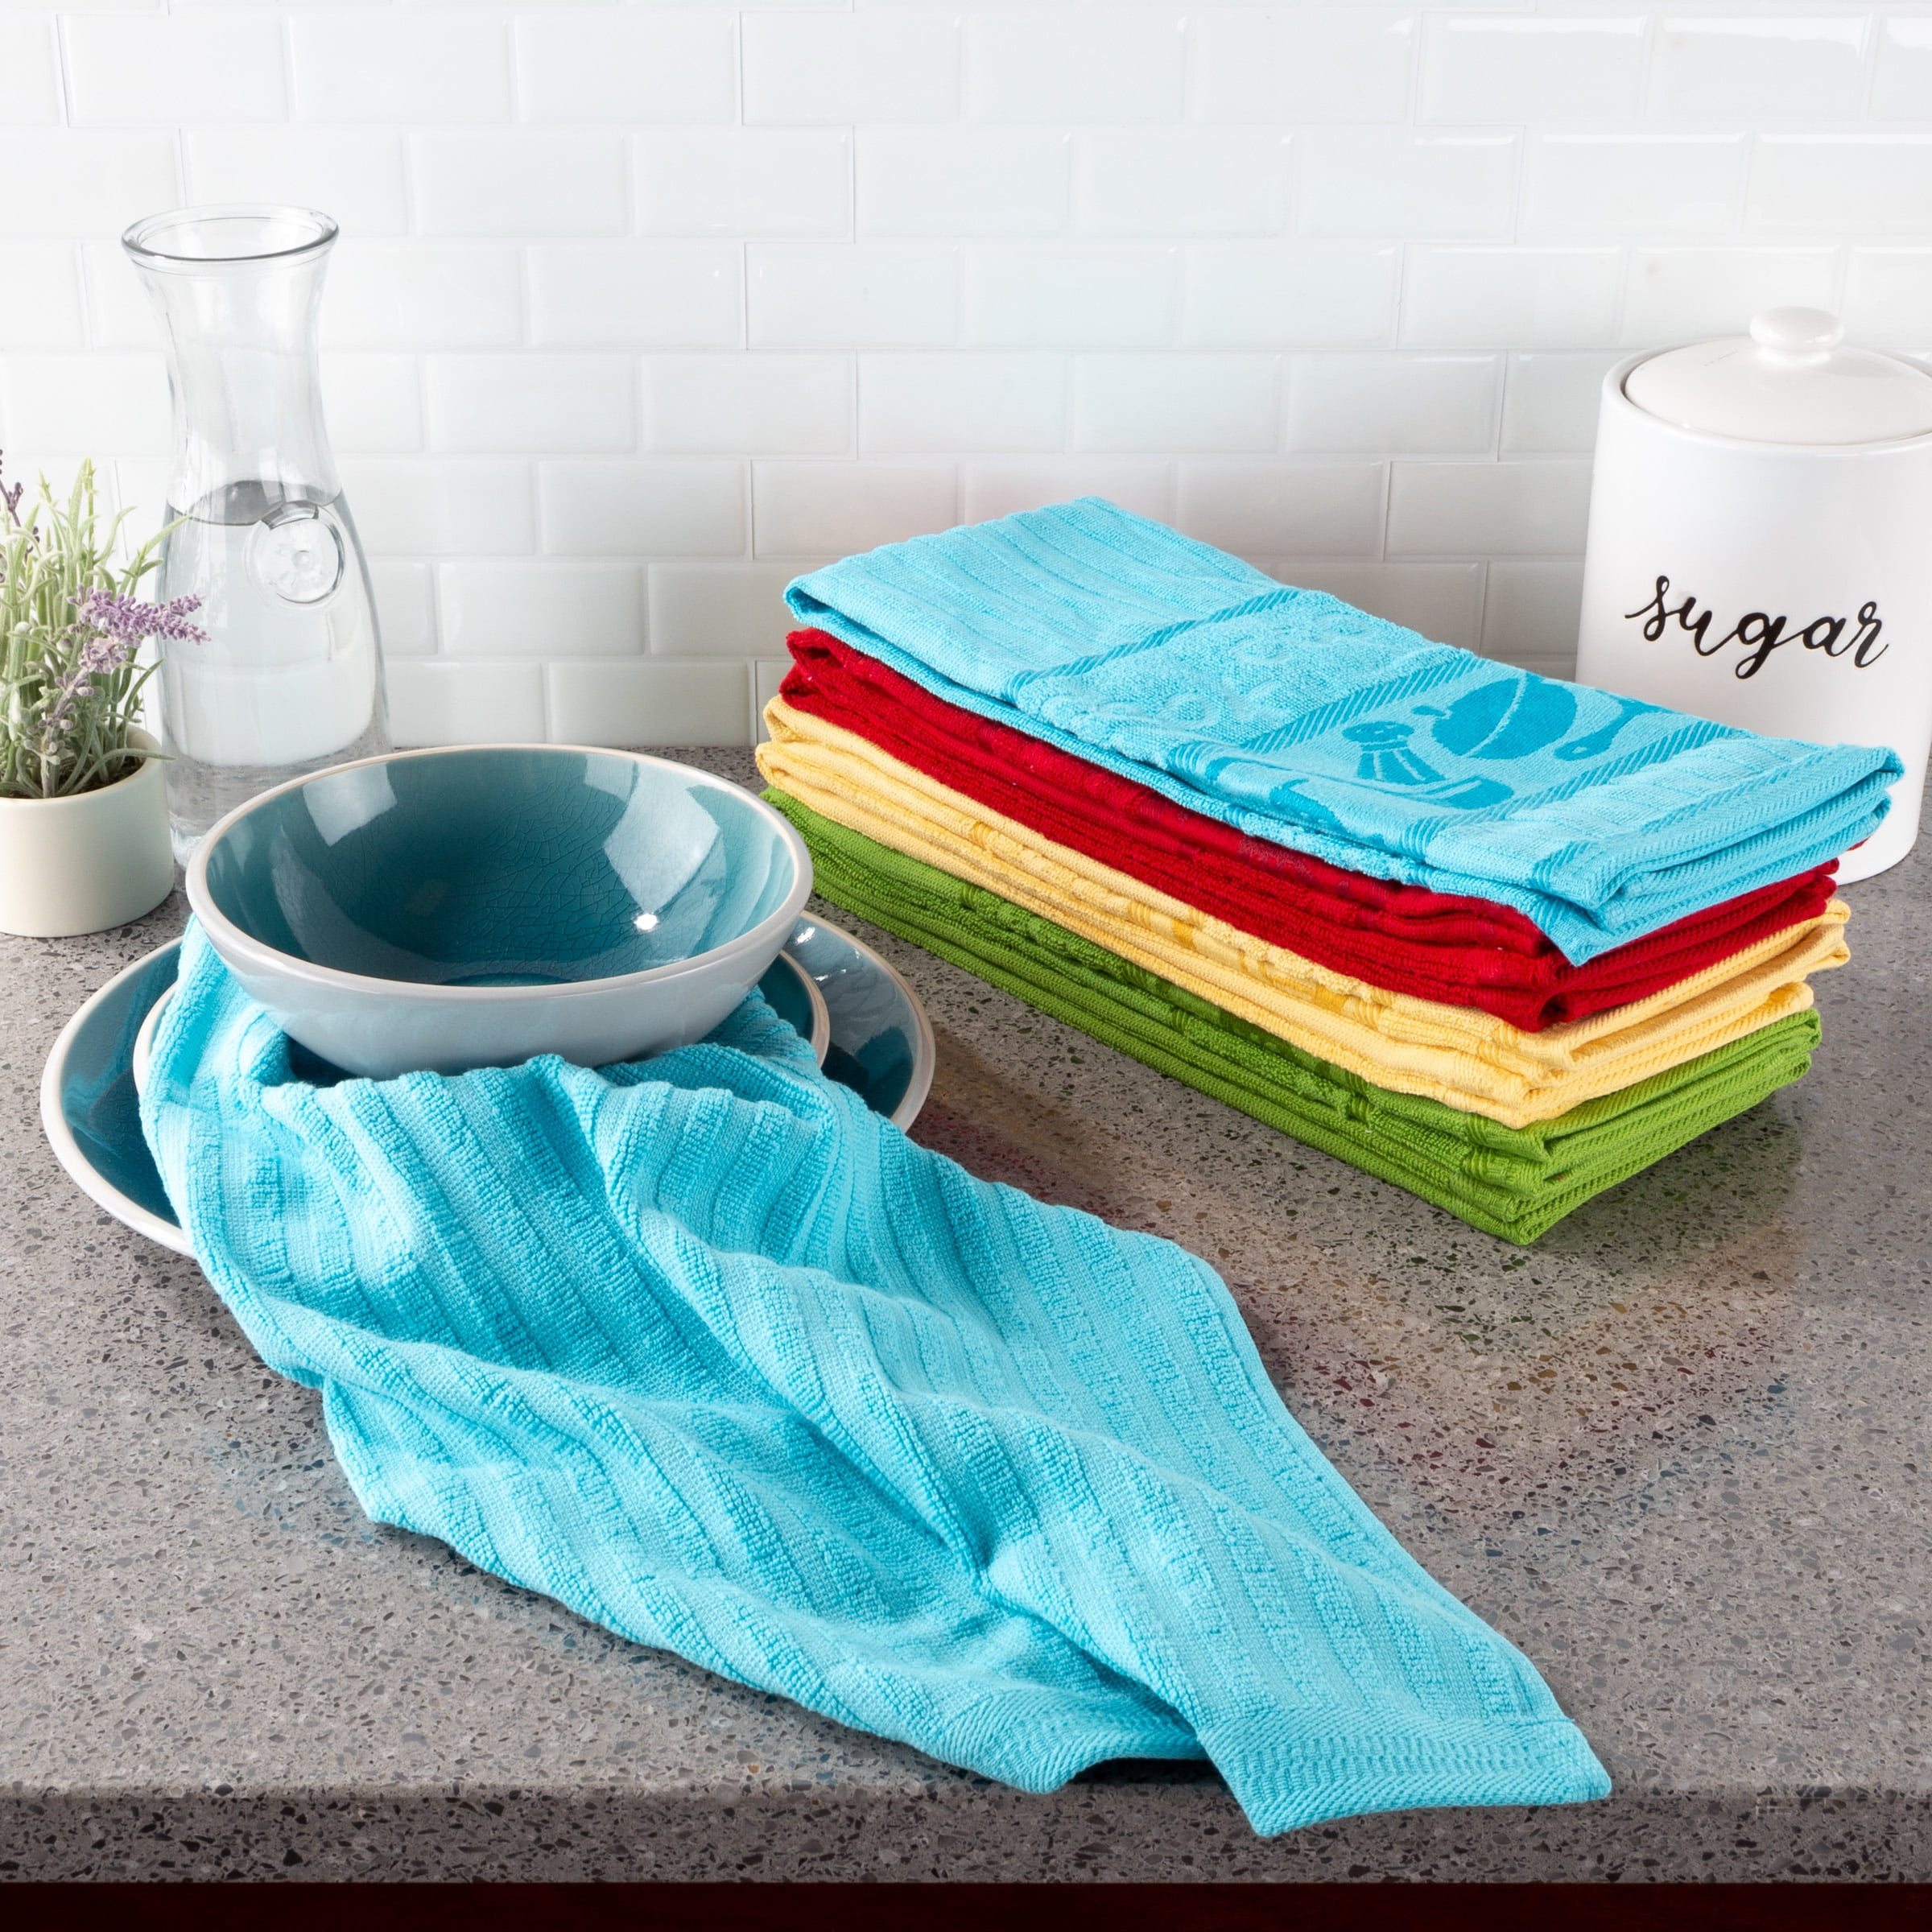 Set of 8 Lime Green Solid Rectangular Dish Towels & Dish Cloths 19